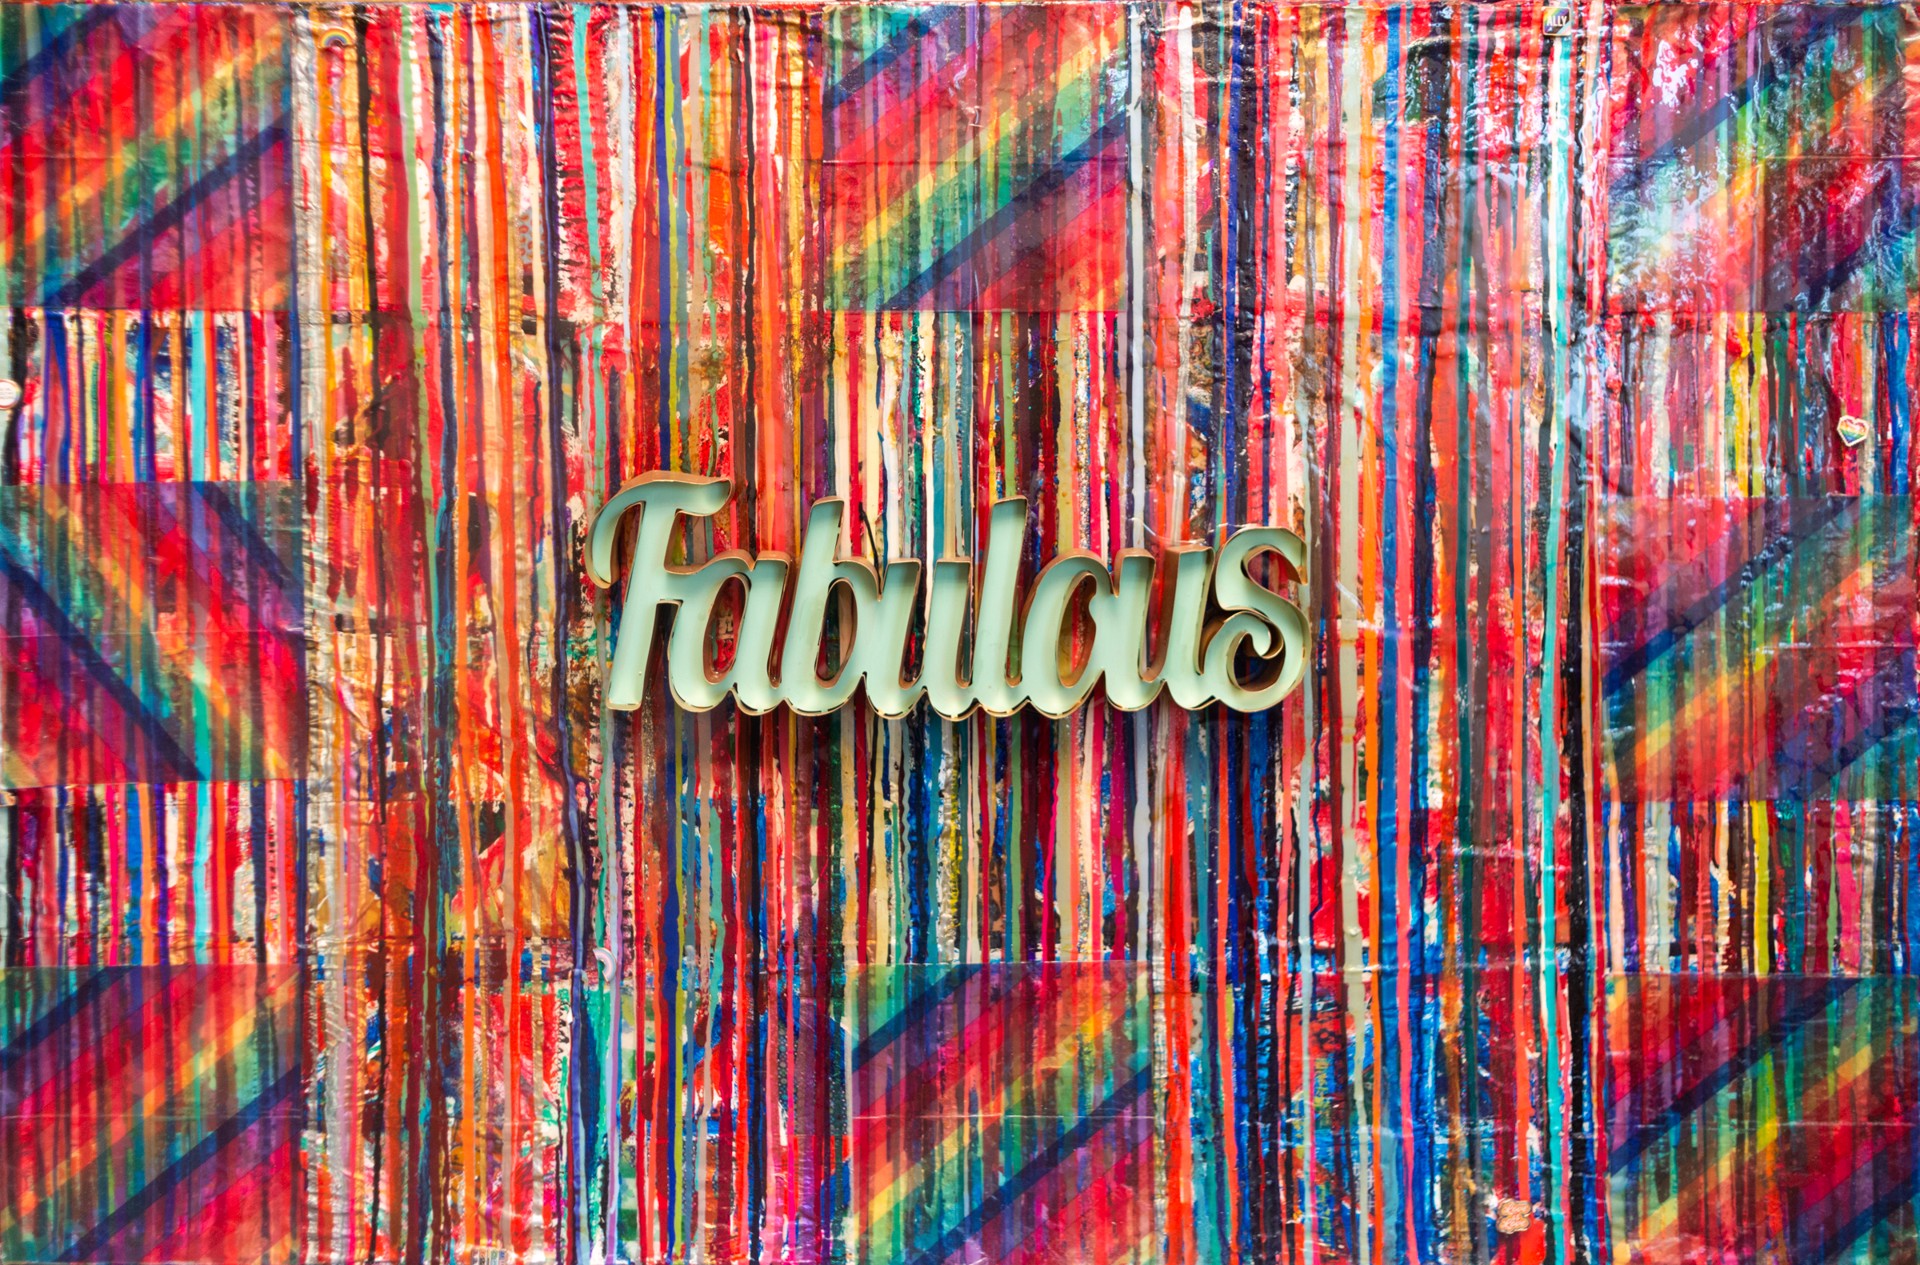 Fabulous by Emily Blaschke